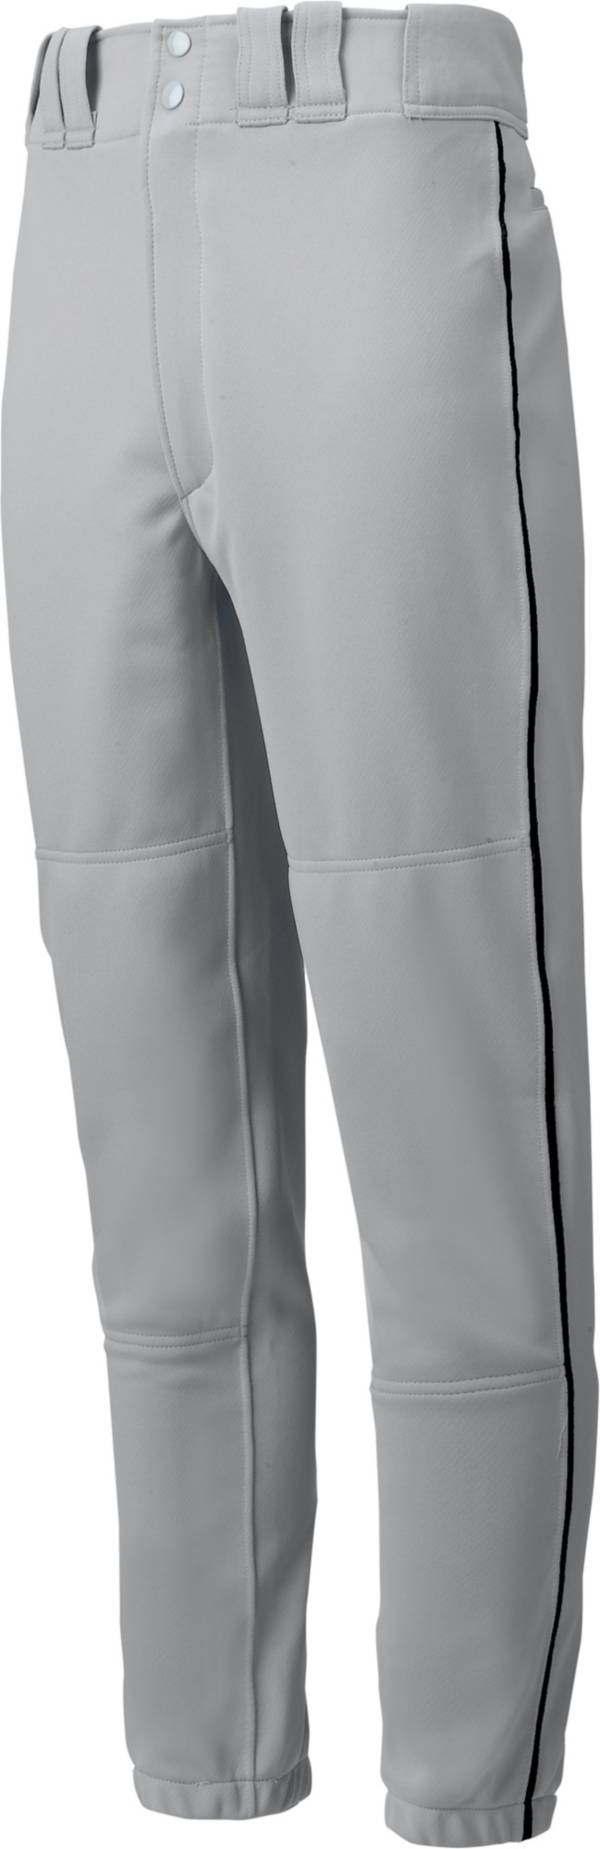 Mizuno Men's Premier Piped Baseball Pants product image